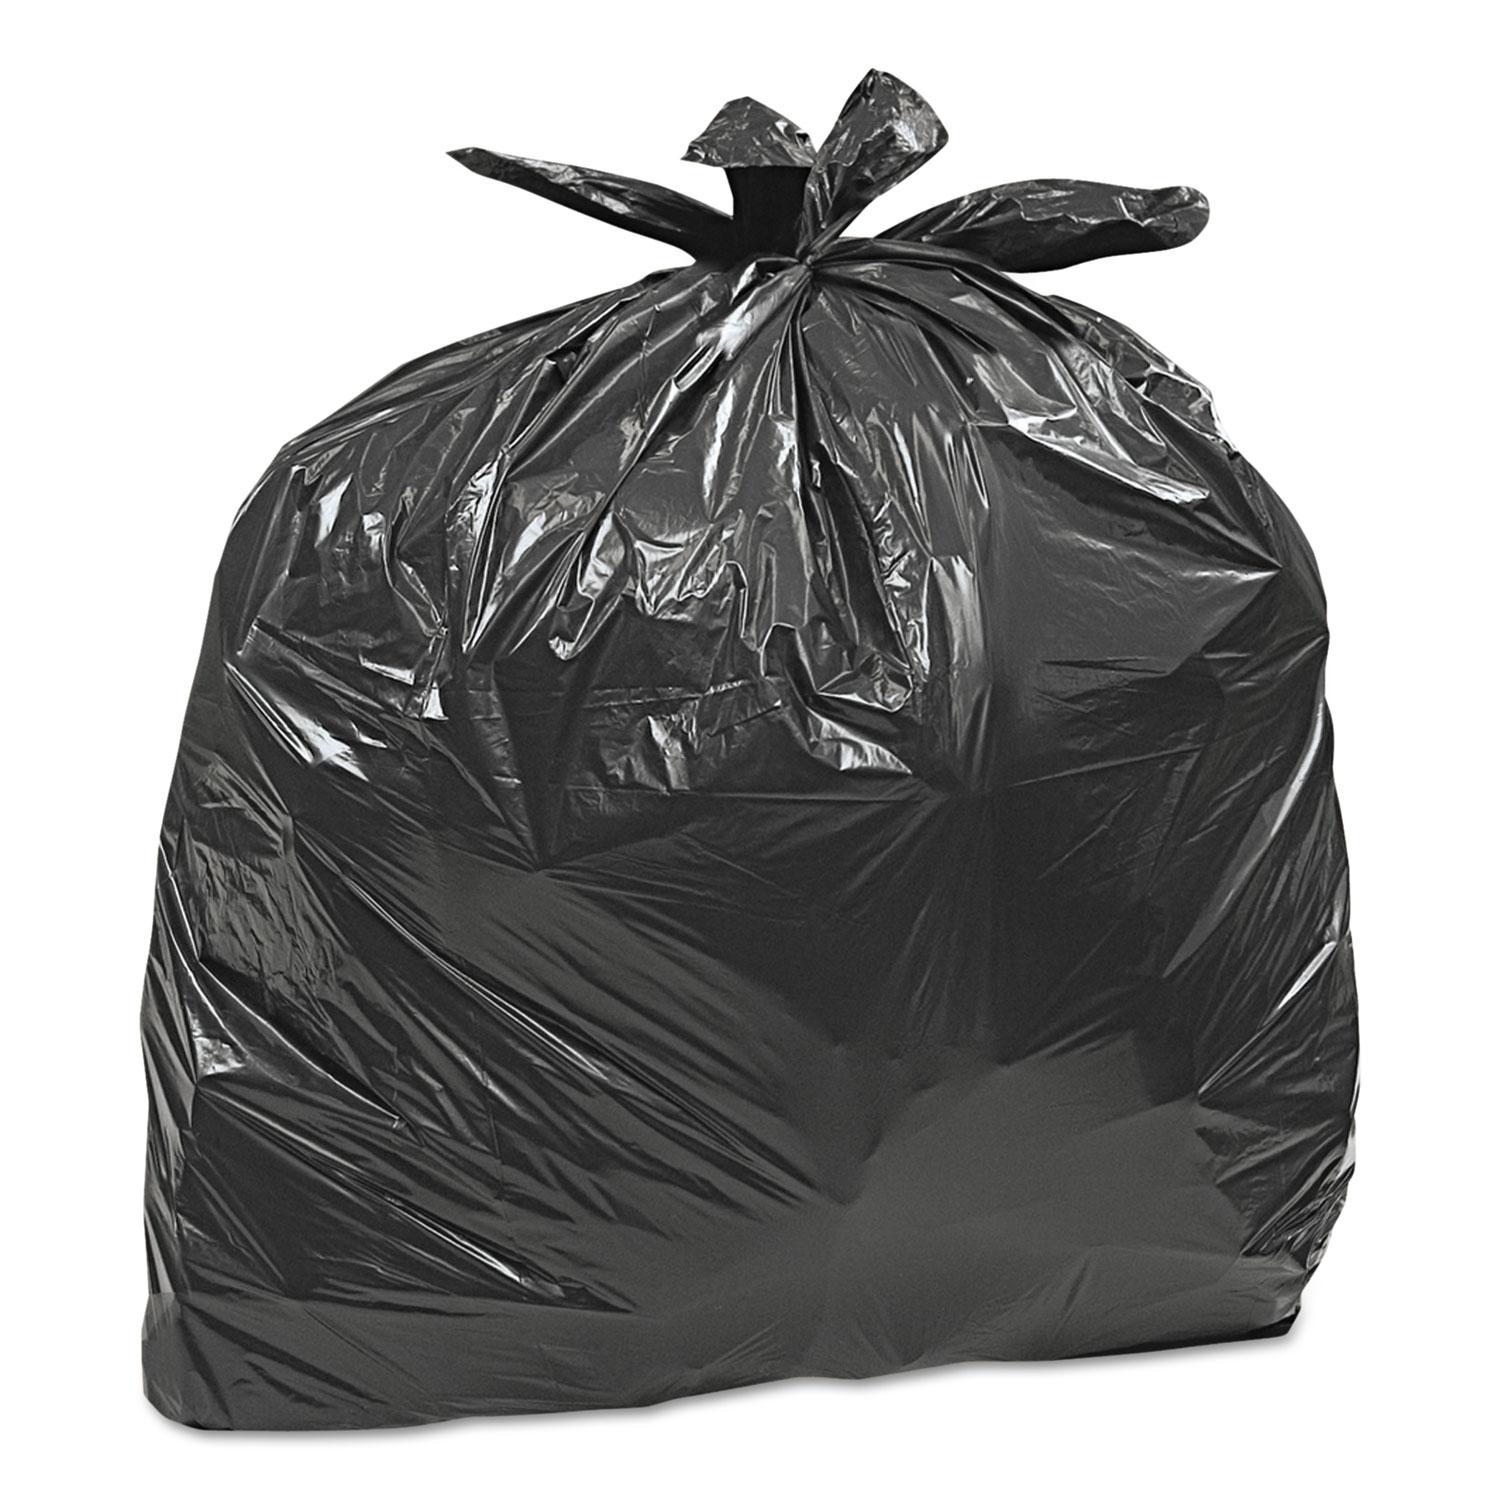 Large Trash Bags, 33 gal, 0.75 mil, 32 1/2 x 40, Black, 50/BX, 6 BX/CT